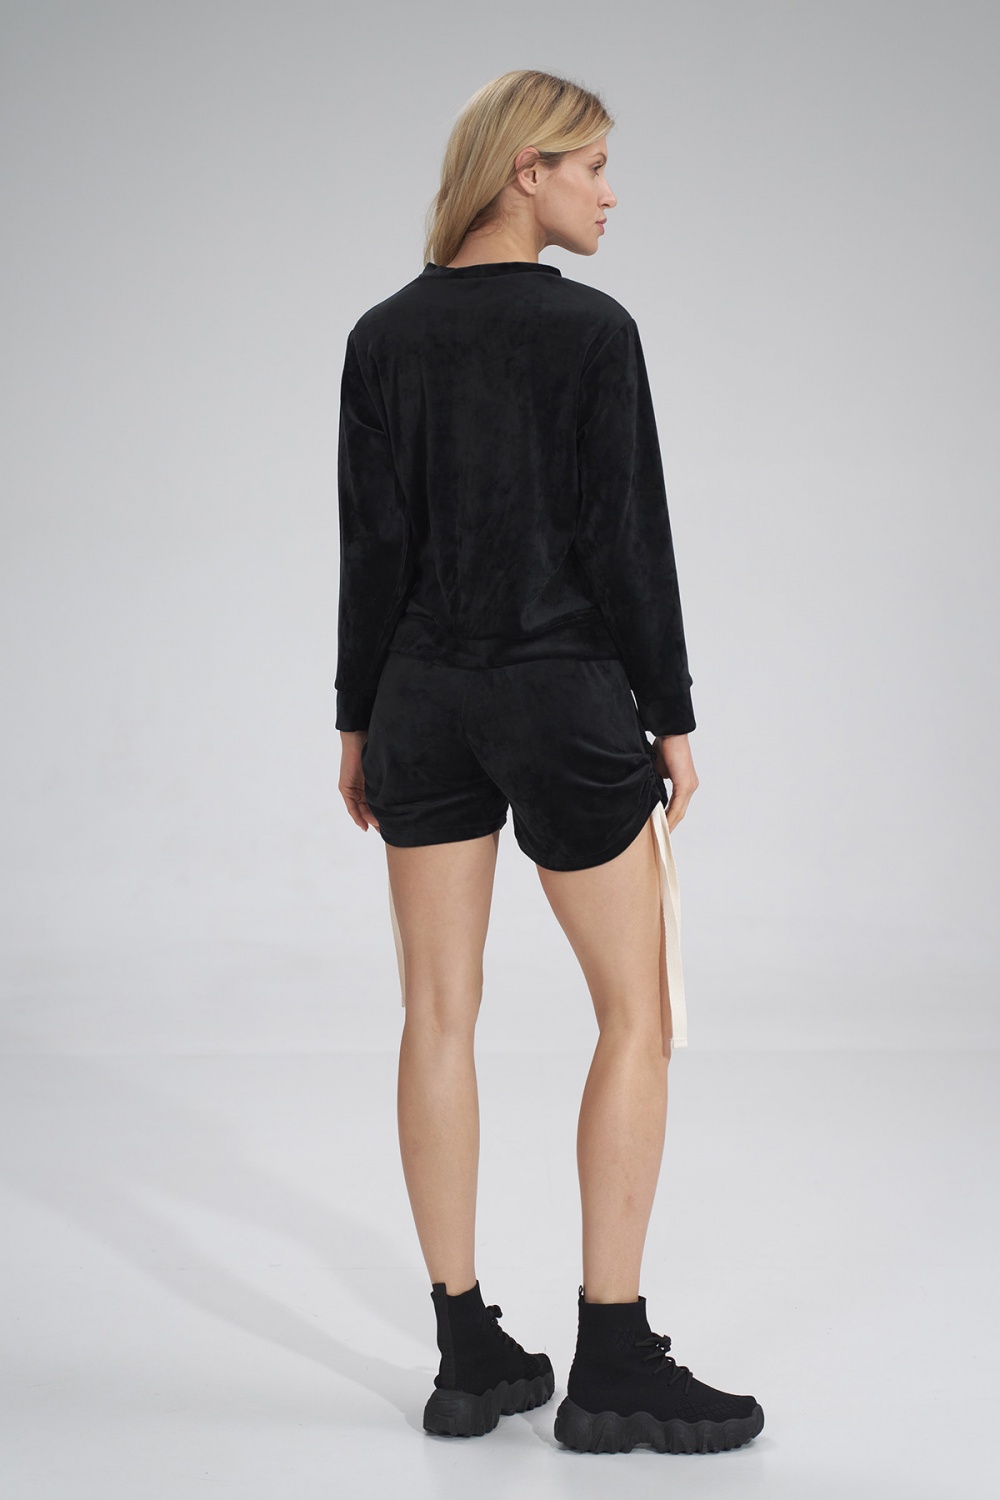  Shorts model 154667 Figl  black